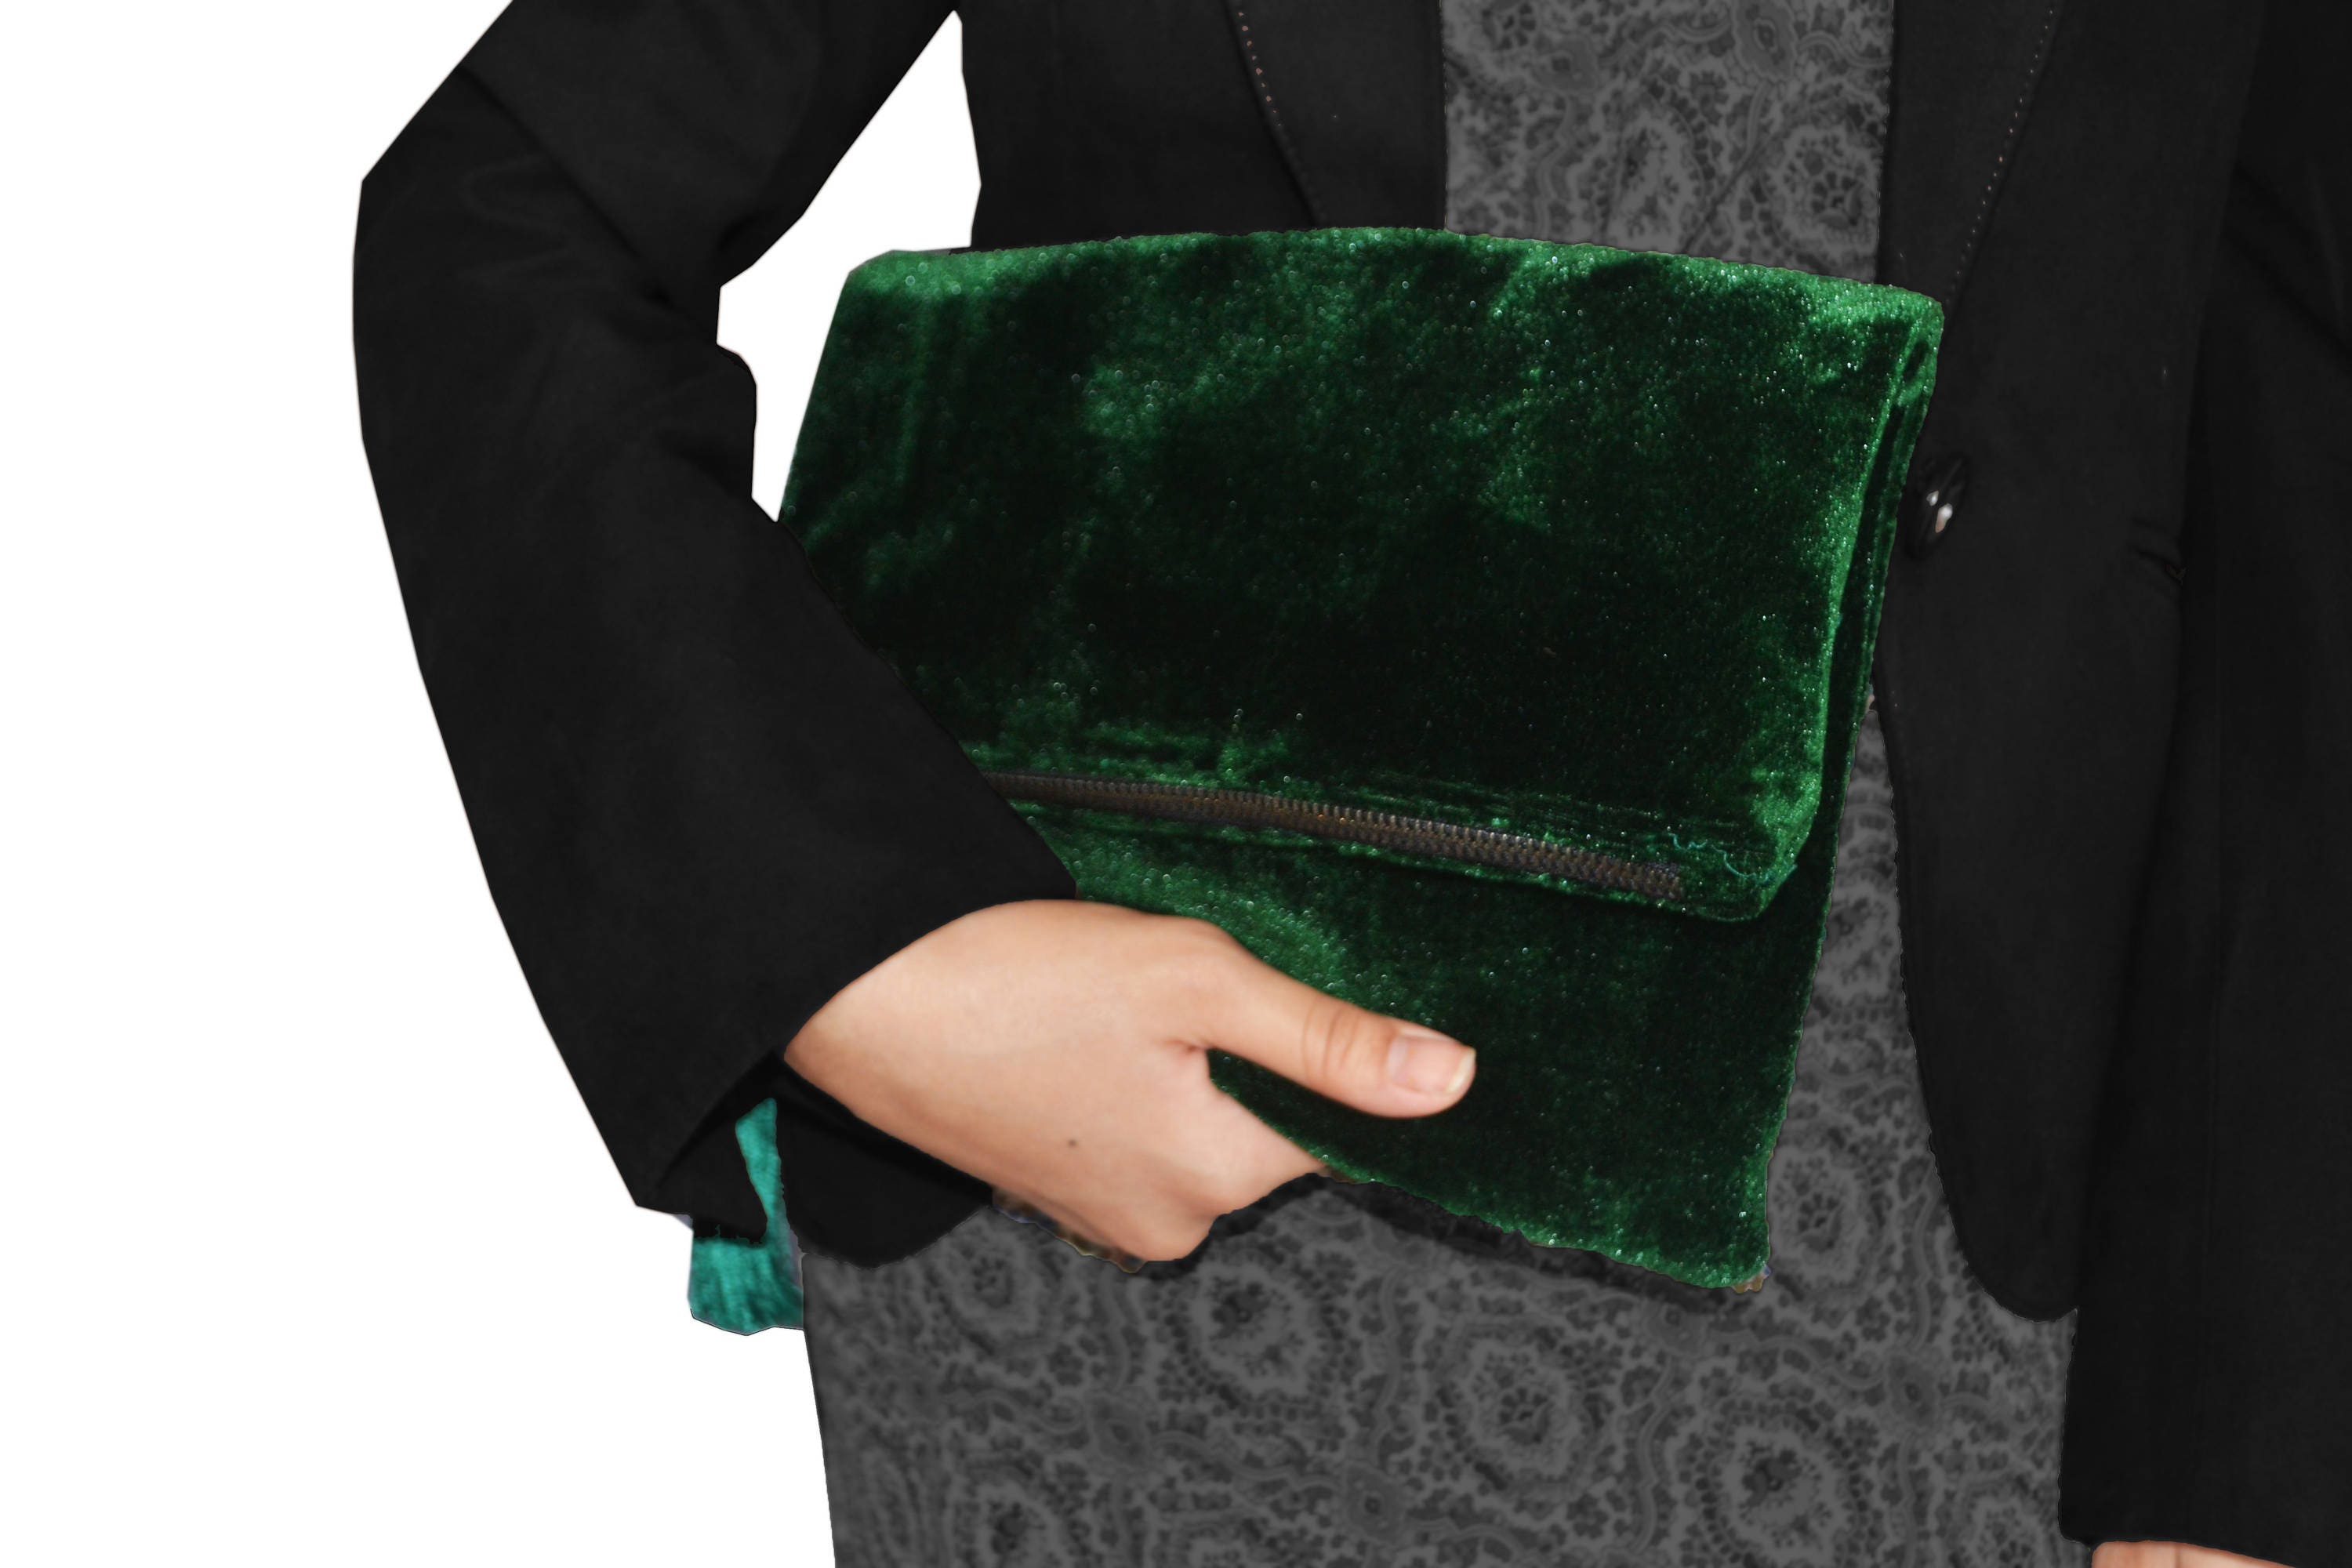 Velvet Clutch Emerald Green Foldover Bag Fold Over Clutch 